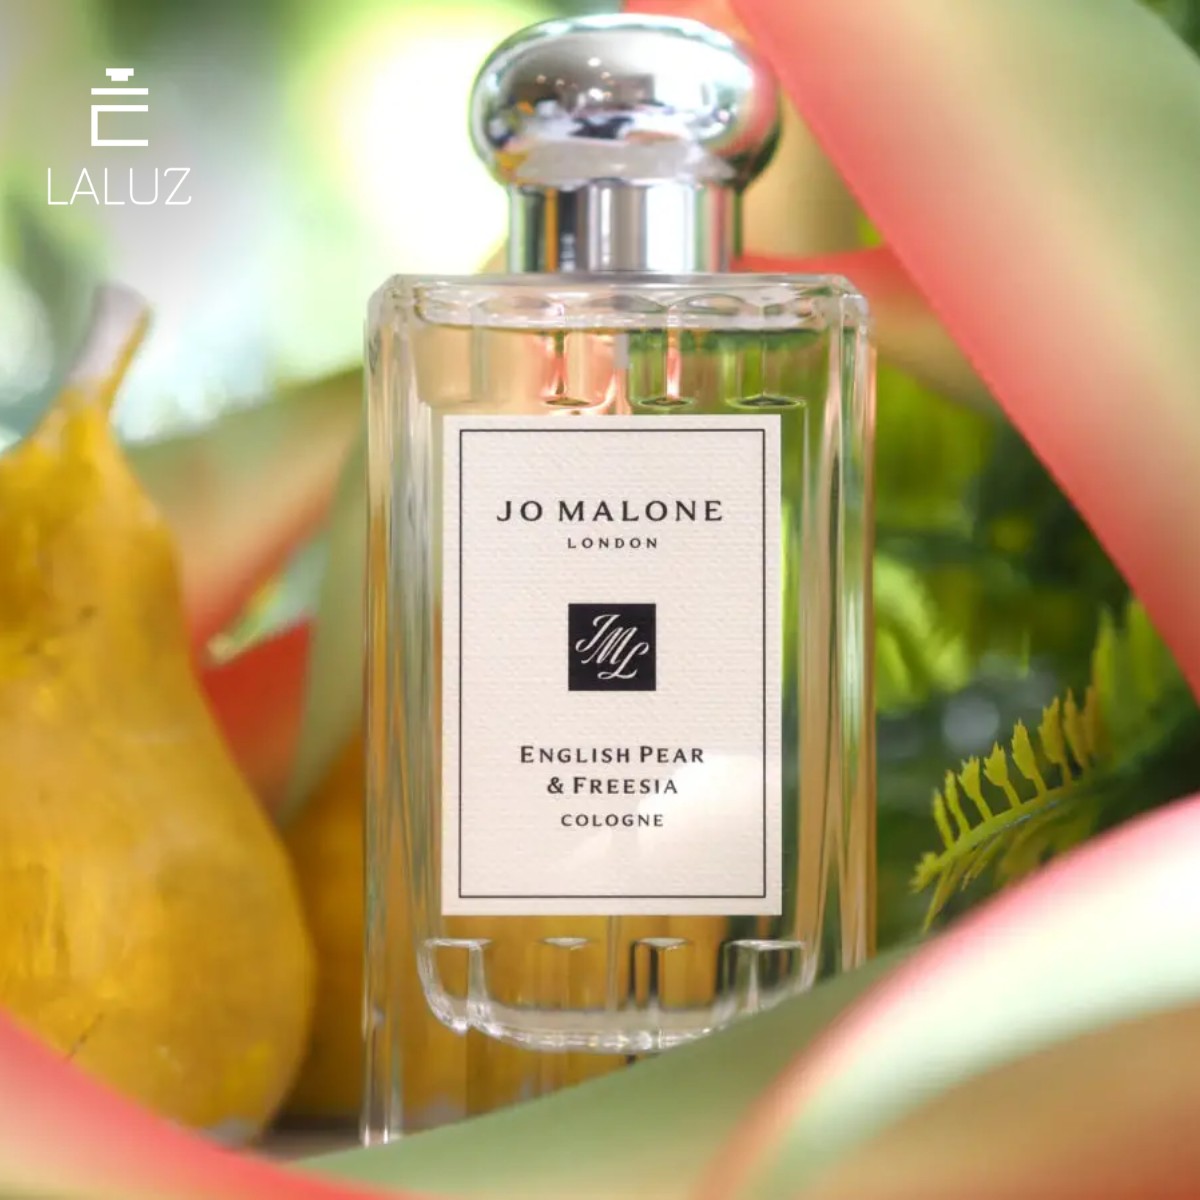 Perfume Jo Malone London English Pear & Freesia Cologne thiết kế độc đáo